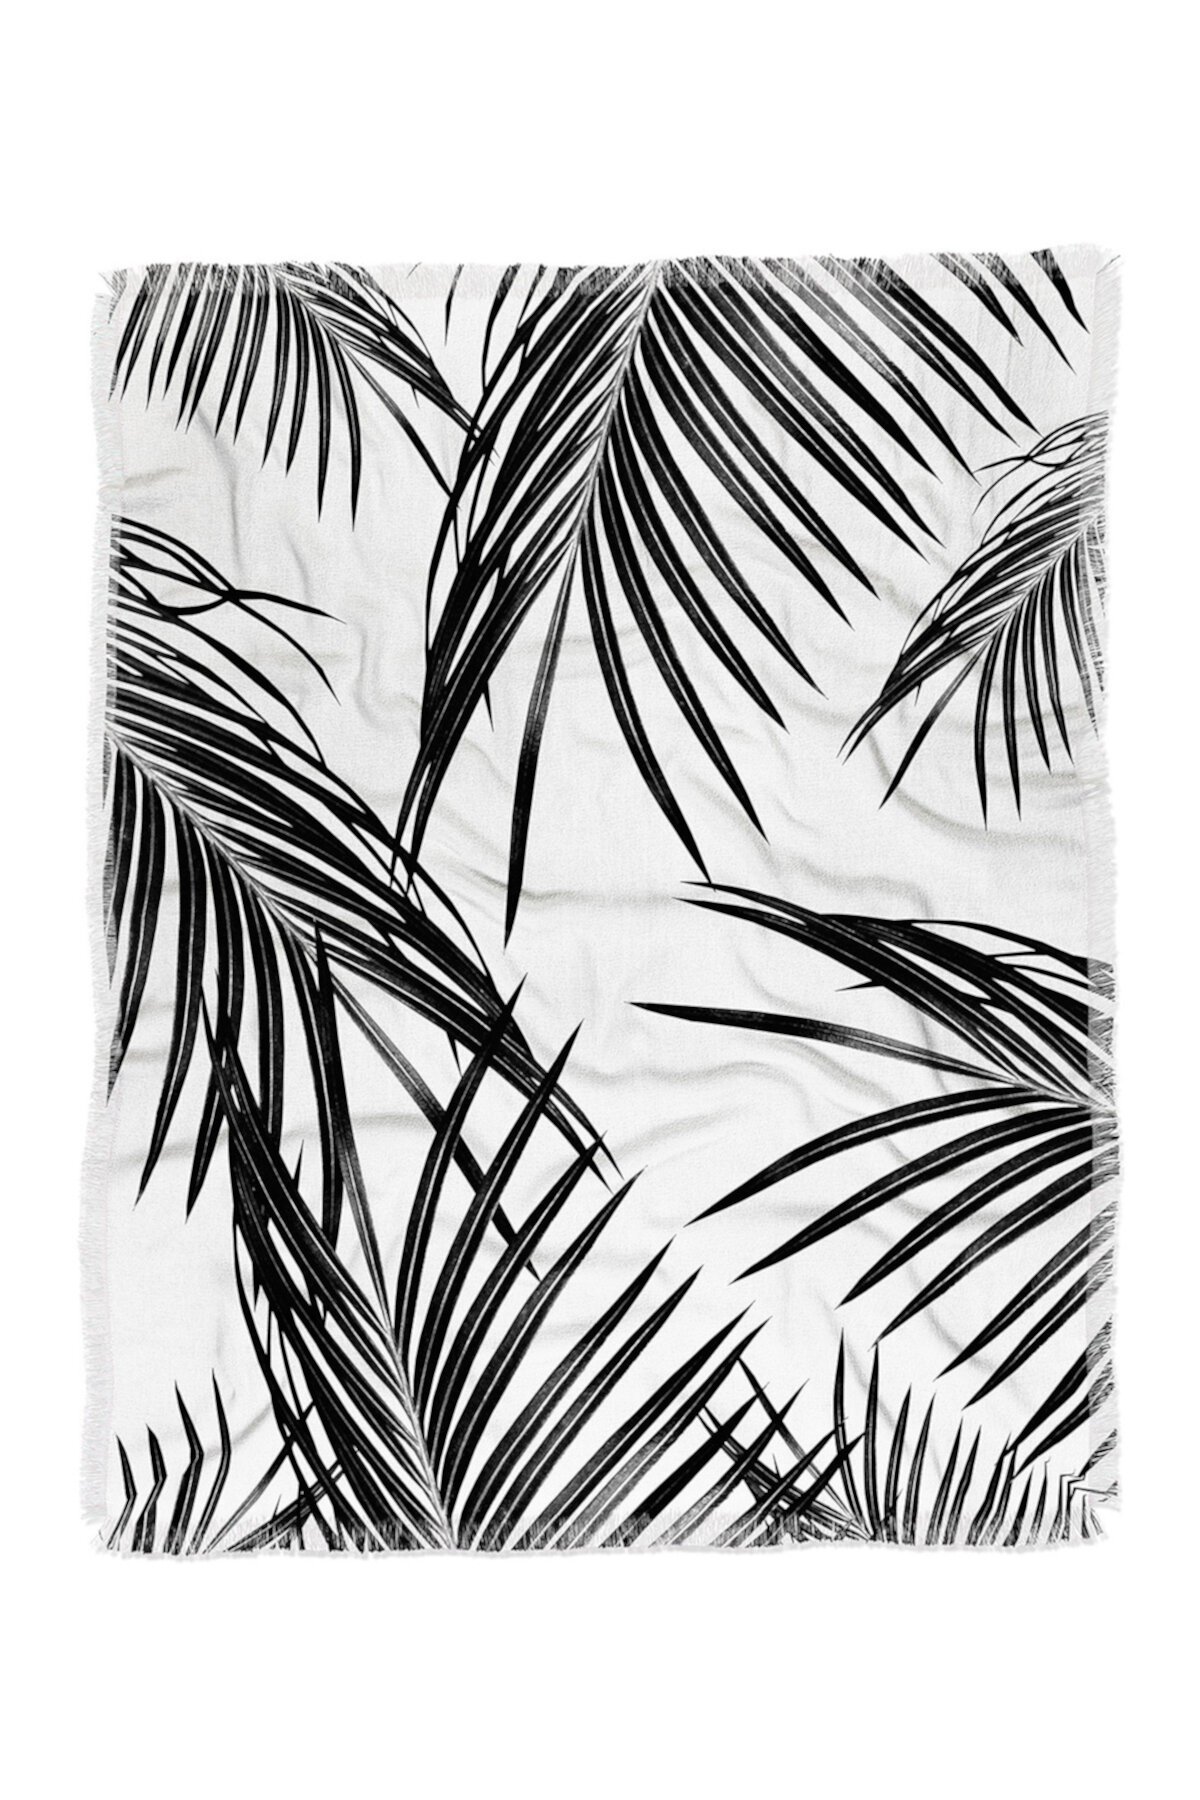 anitabellajantzart Black Palm Leaves Dream 1 Тканое одеяло Deny Designs